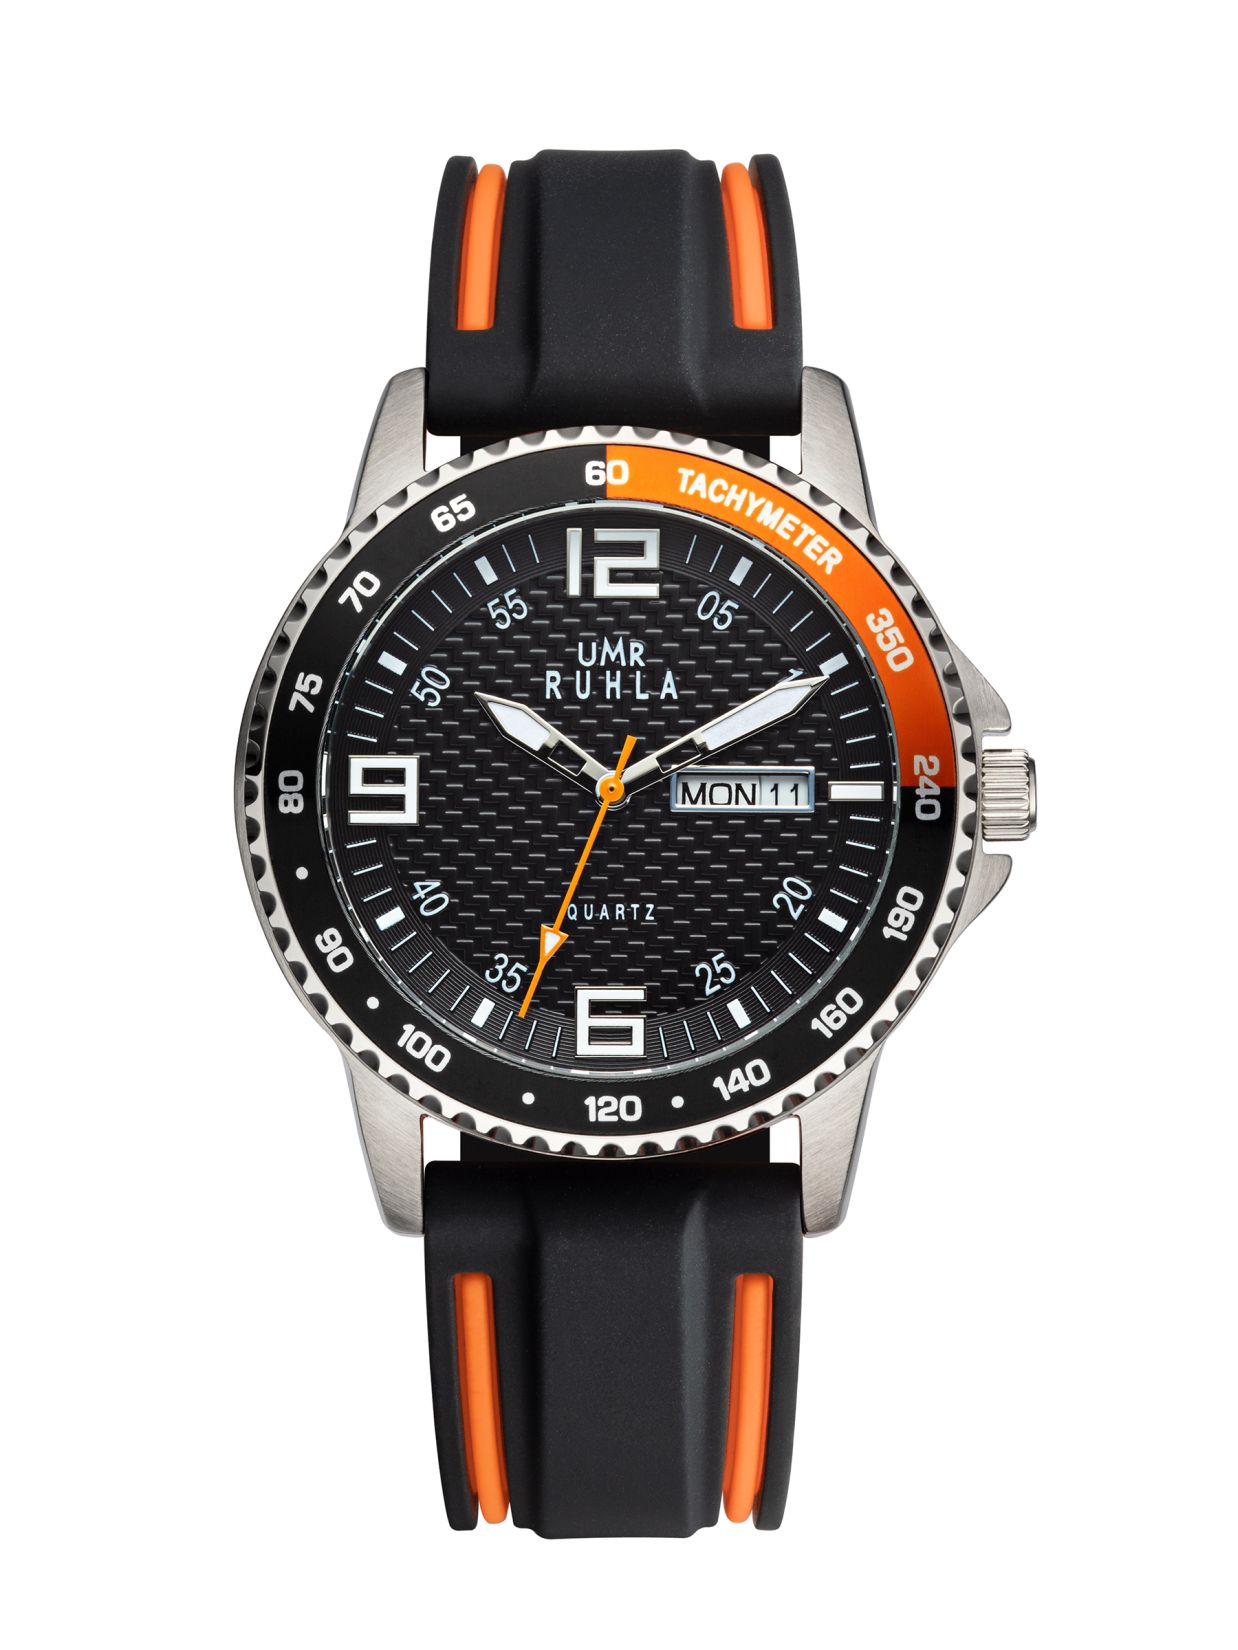 Uhren Manufaktur Ruhla - Armbanduhr Sport - schwarz-orange